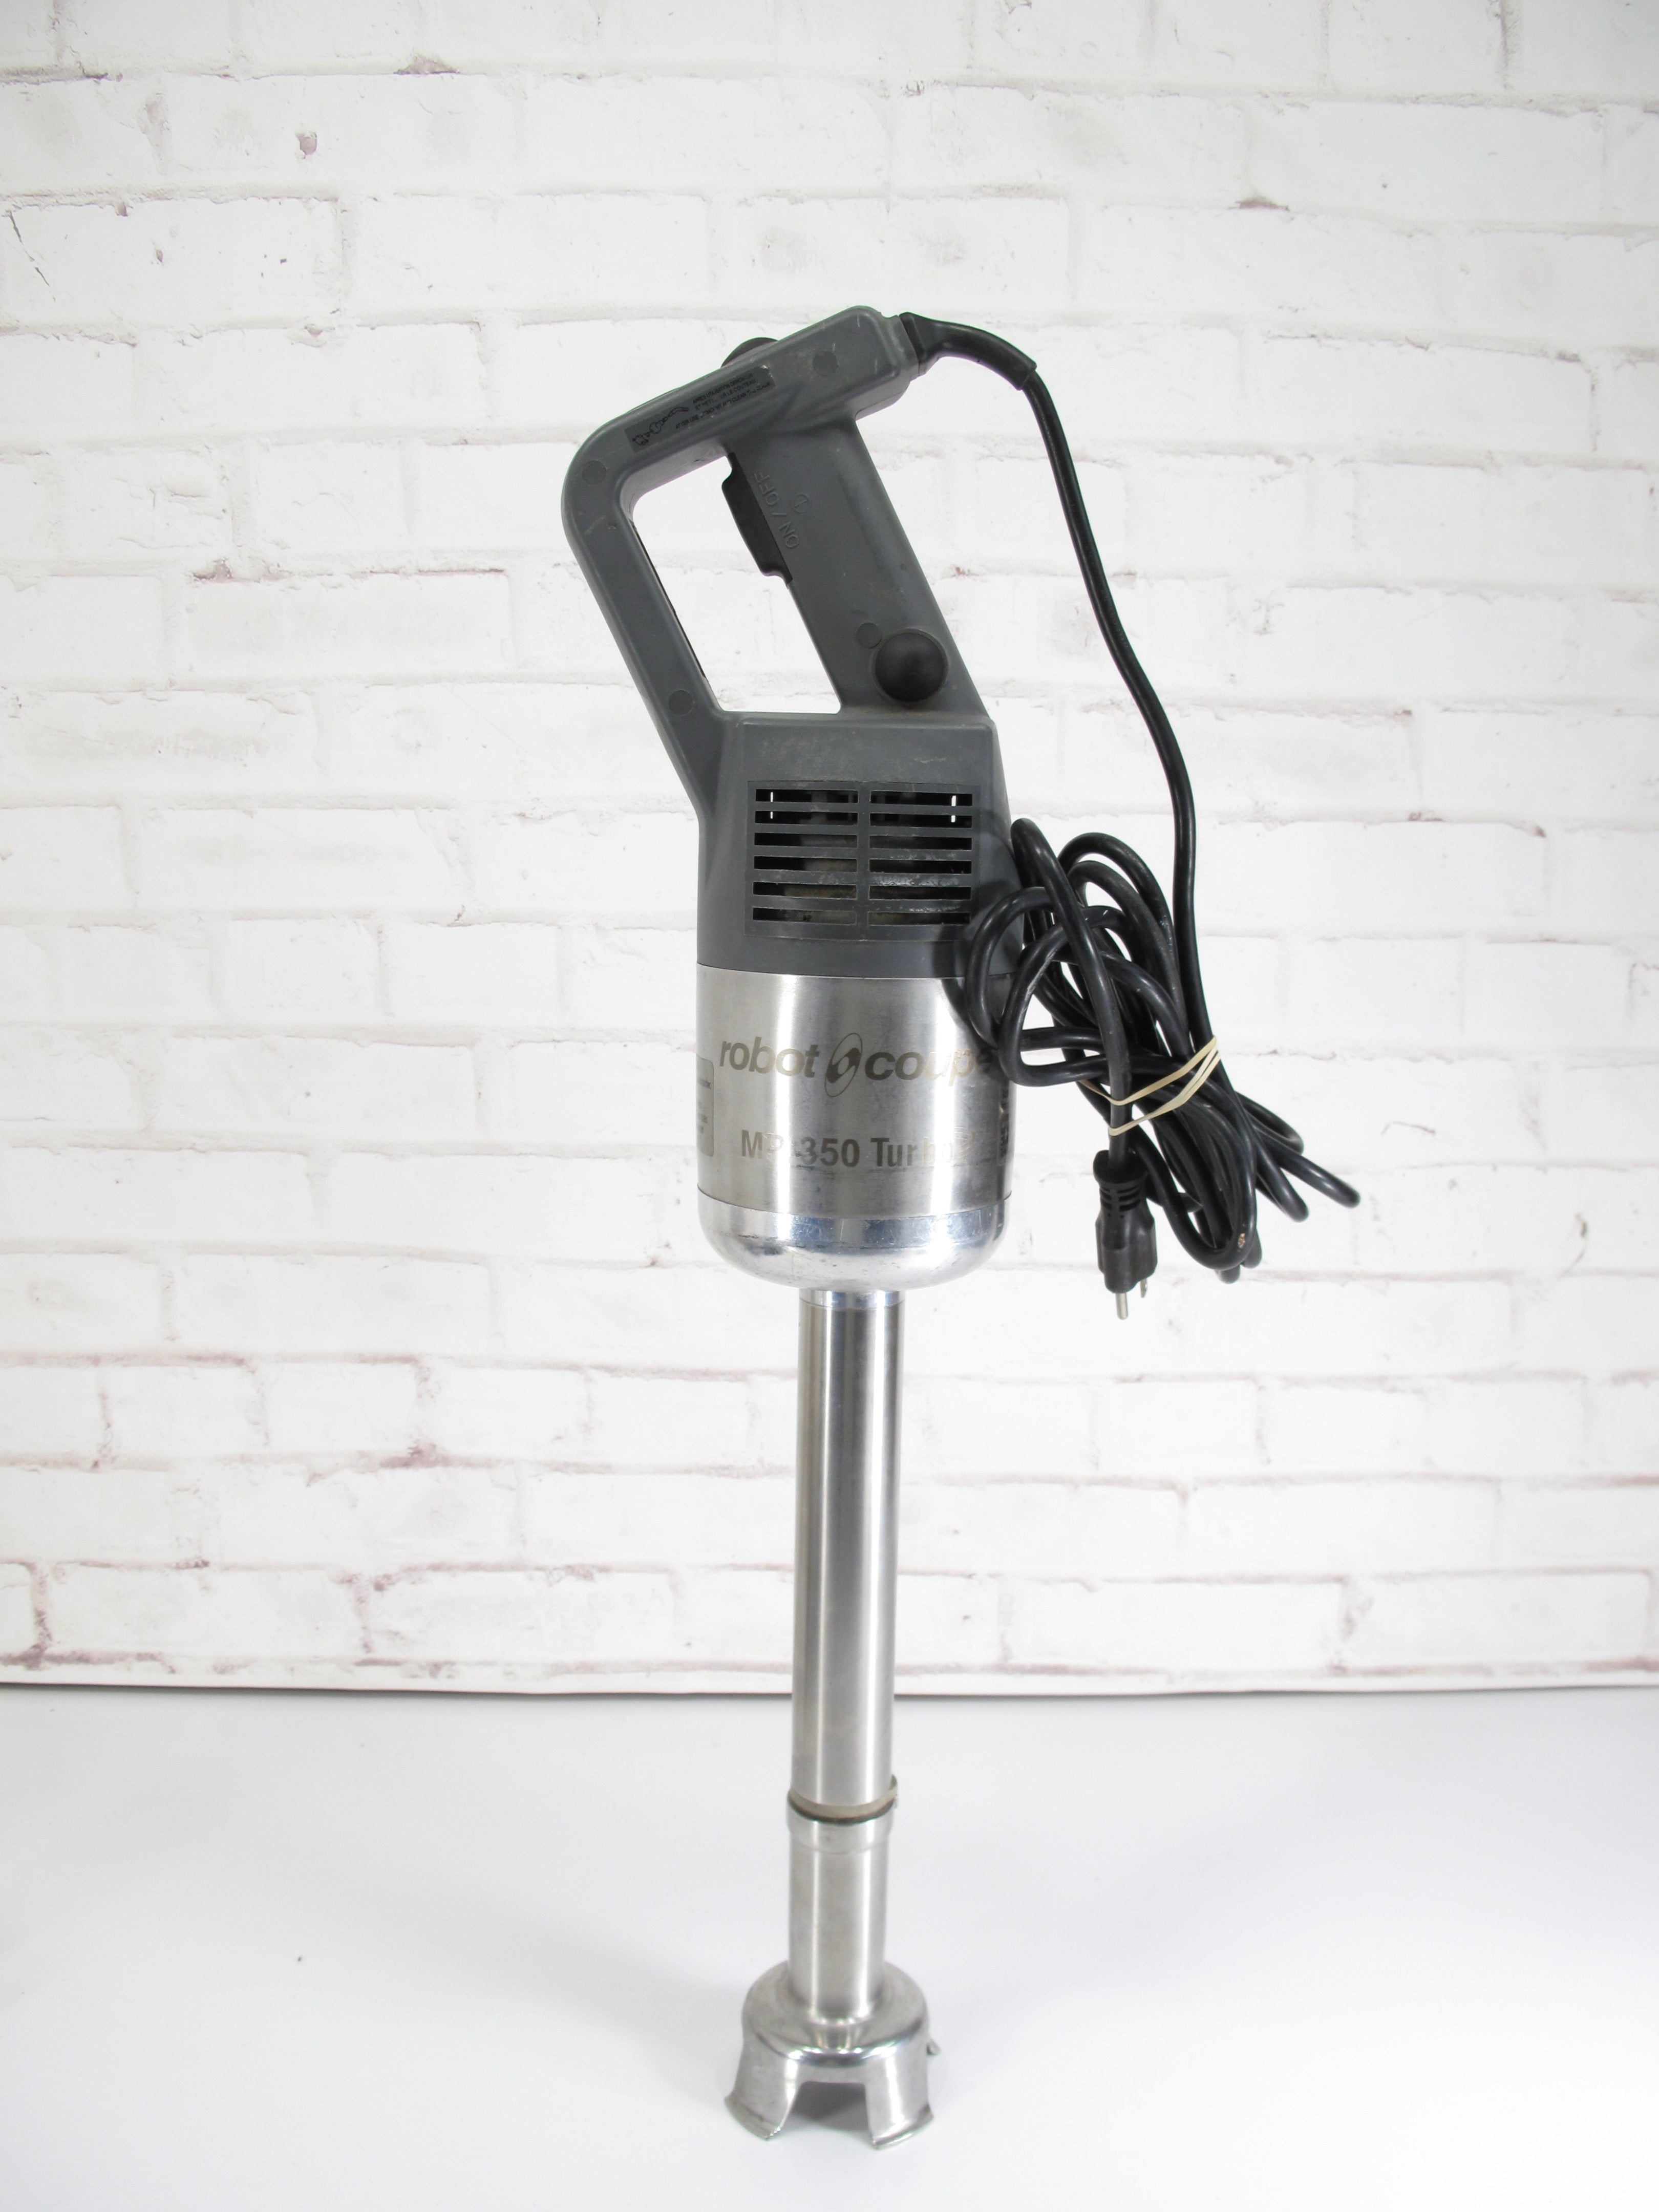 Robot Coupe MP350 Turbo VV 14